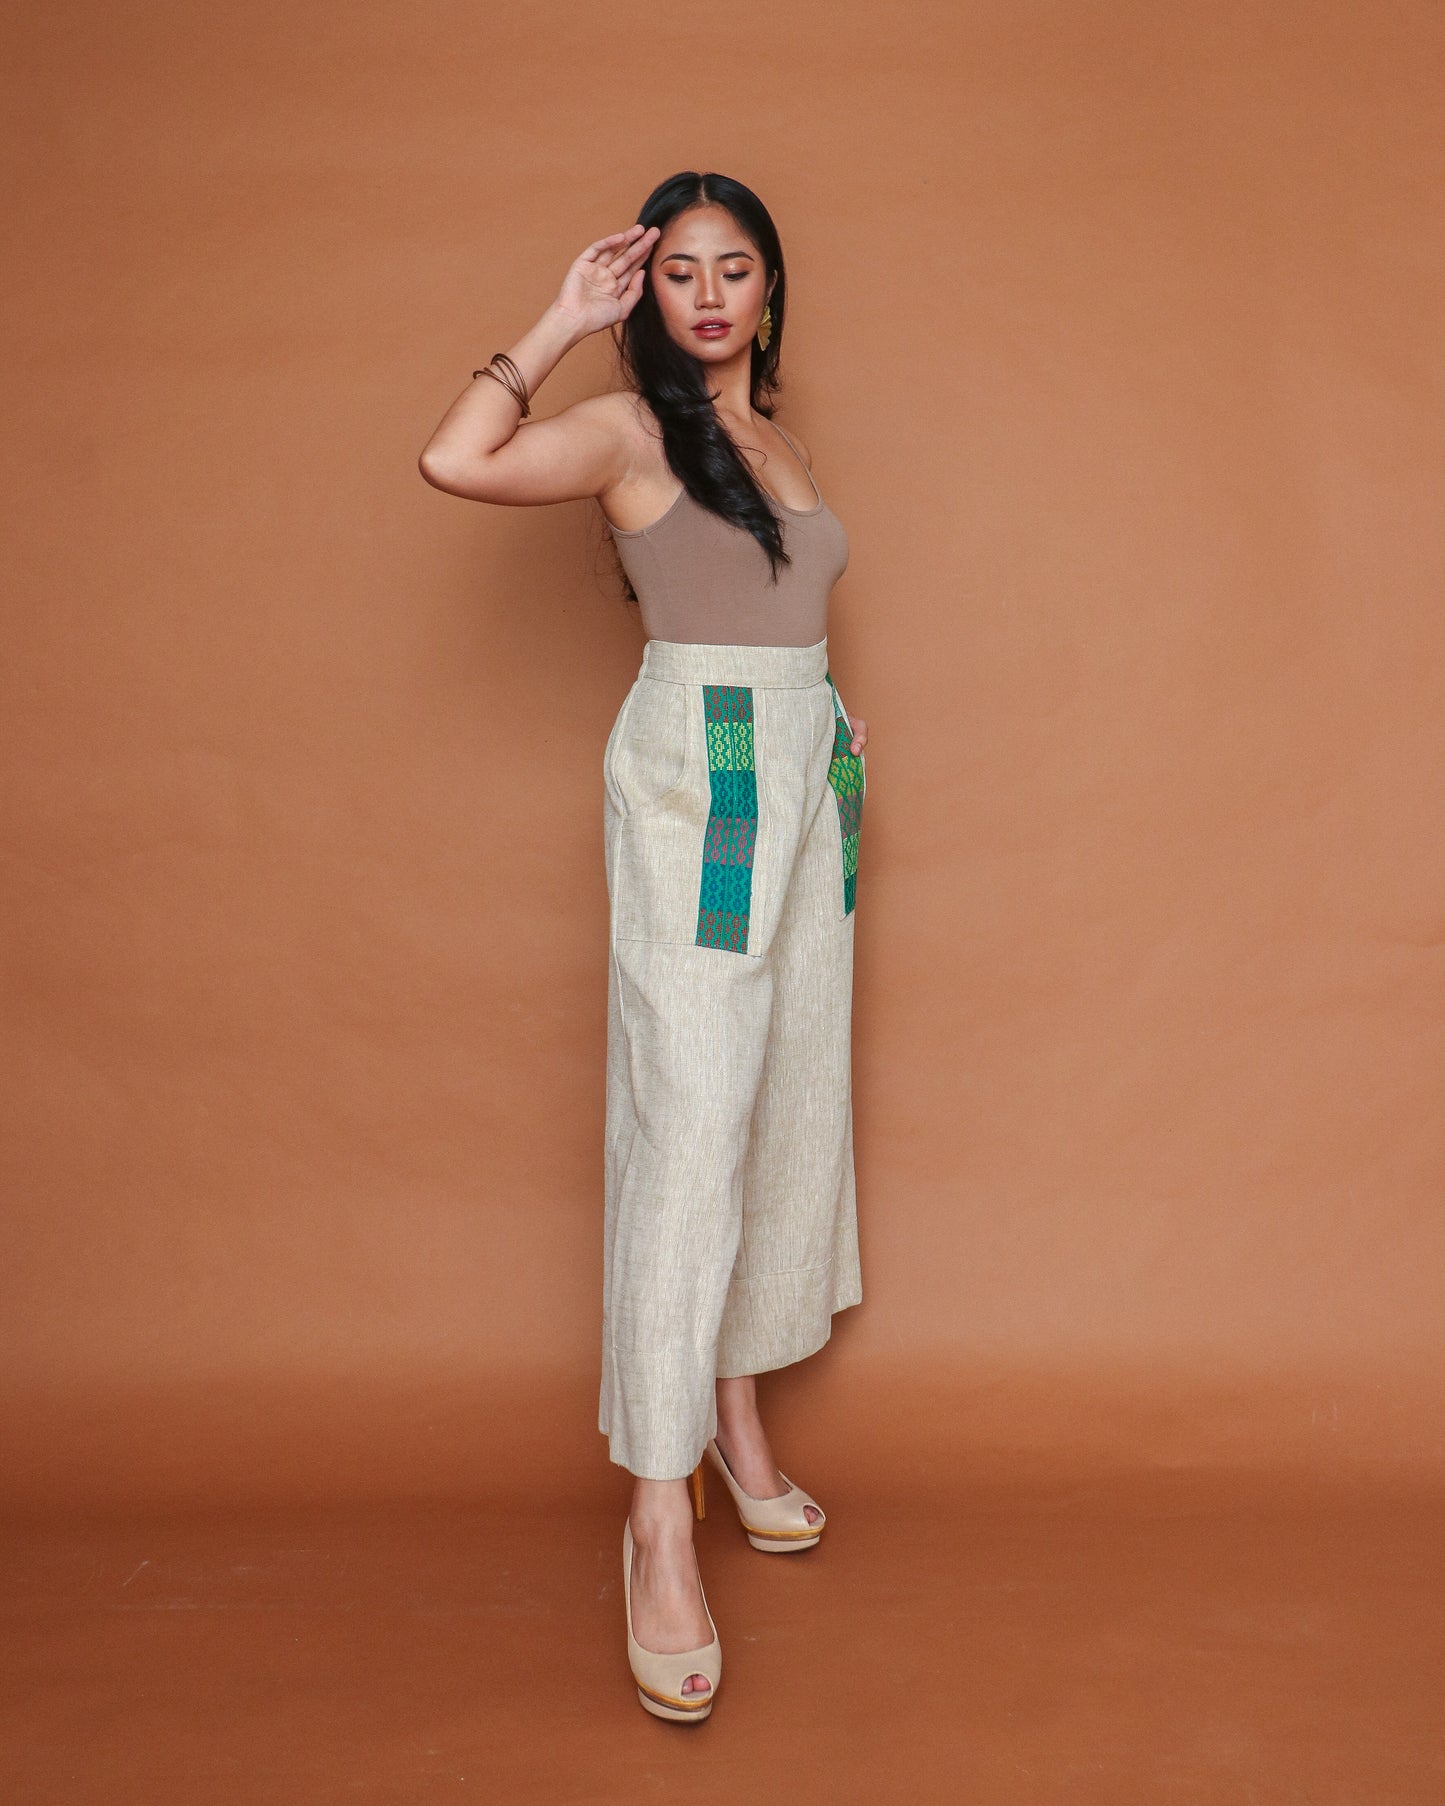 Matangkad Premium Linen Pants with Langkit of Marawi Pockets